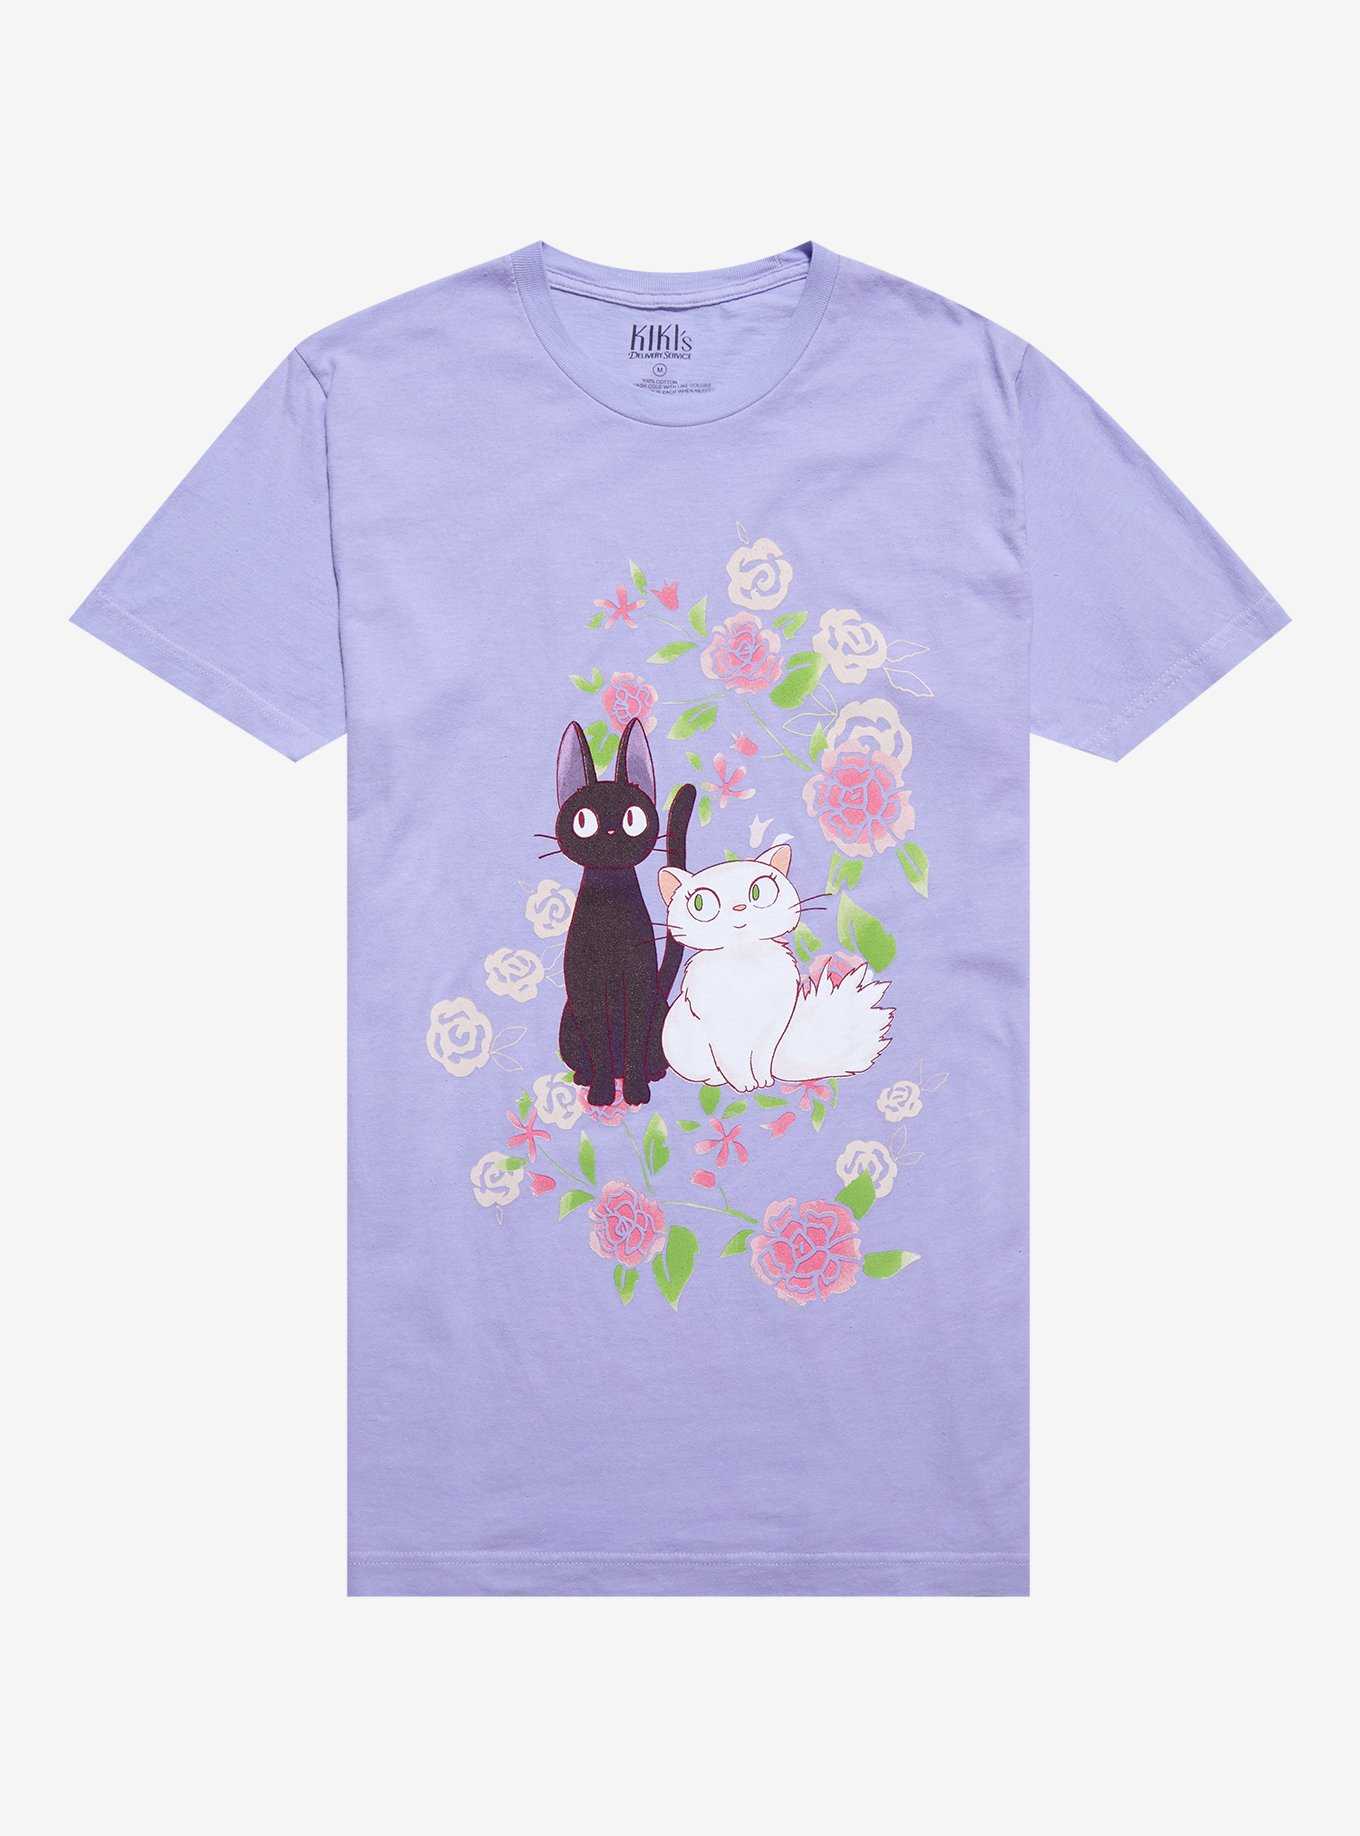 Studio Ghibli Kiki's Delivery Service Jiji Flowers Boyfriend Fit Girls T-Shirt, , hi-res